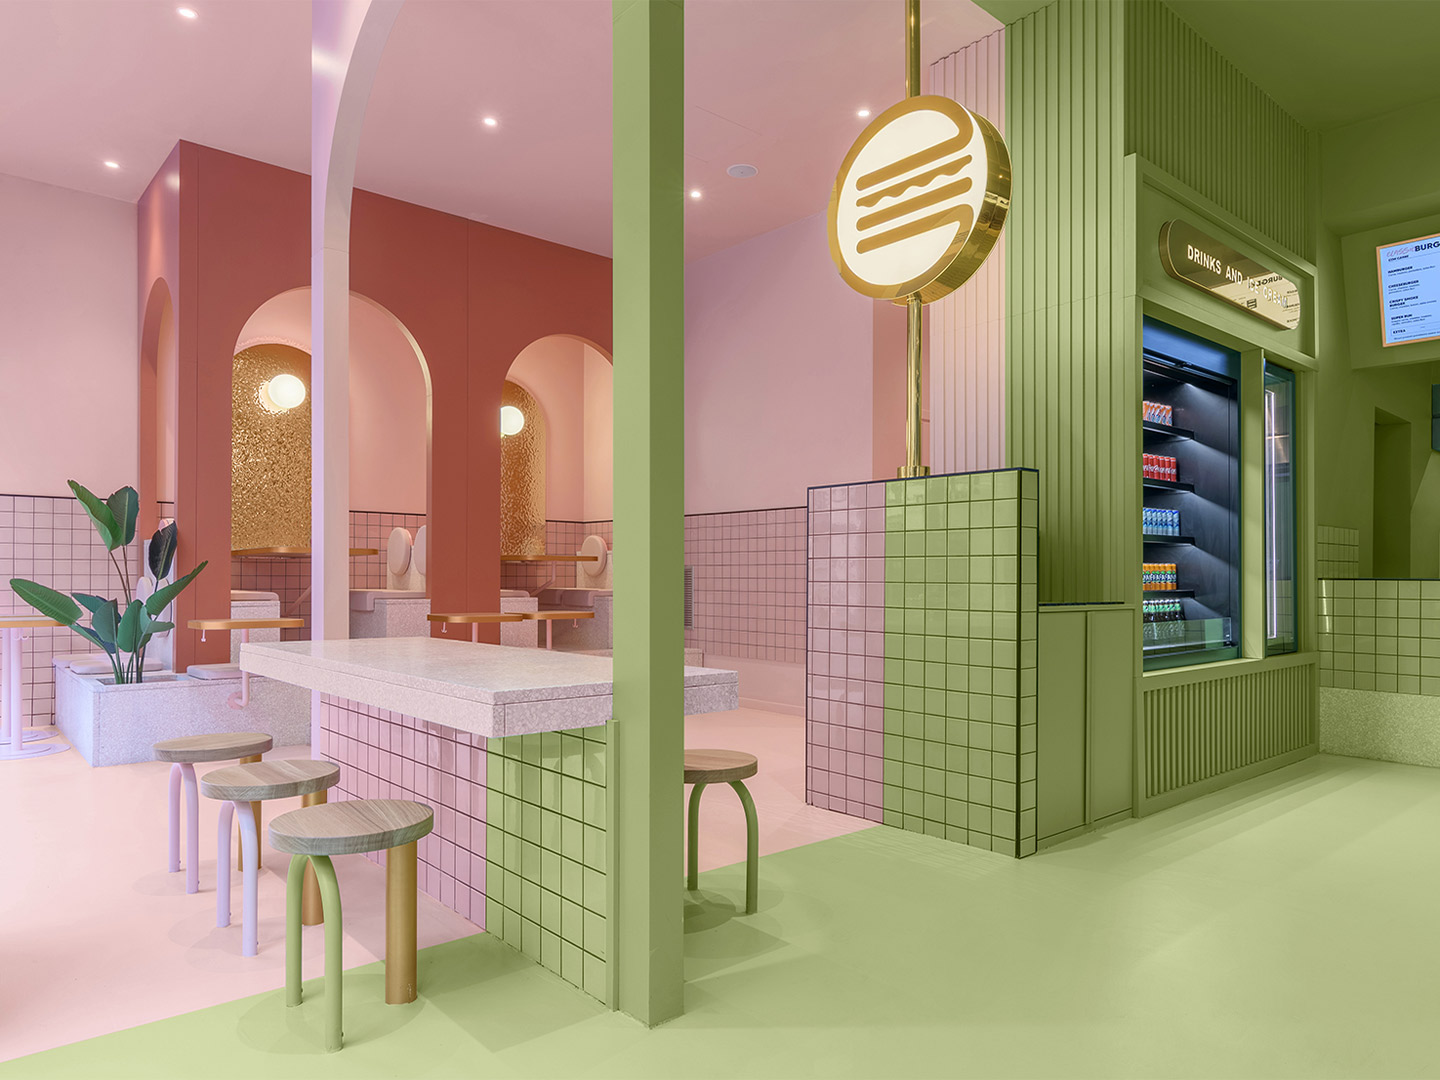 Bun burger restaurant in Turin, Italy, by Masquespacio 2021